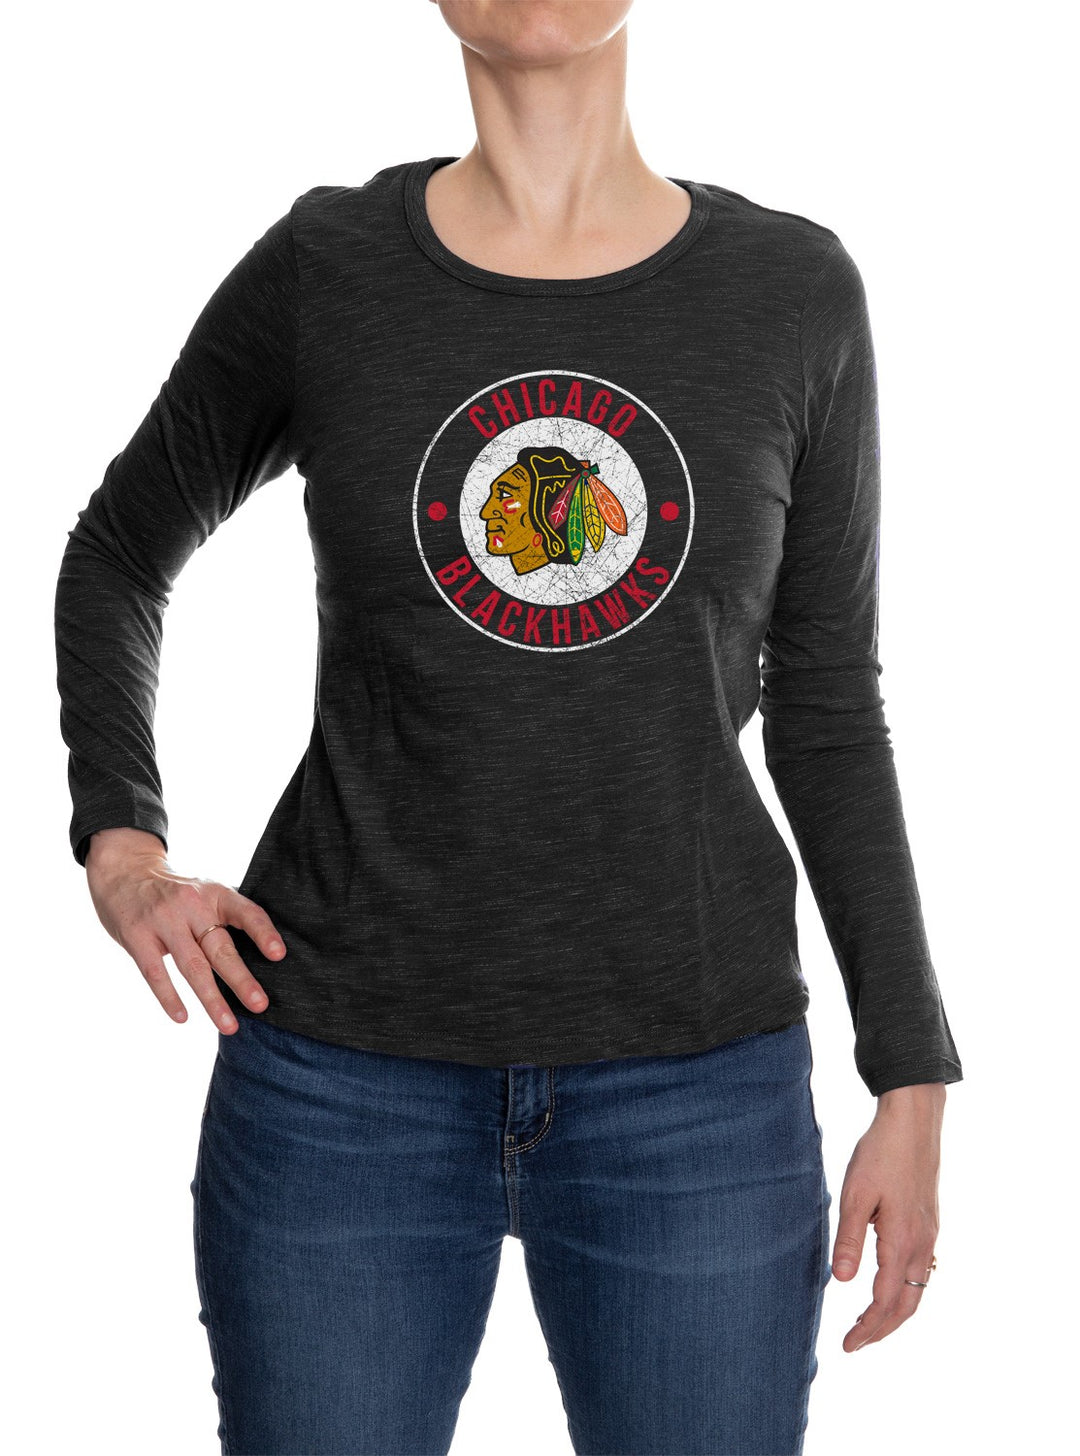 Chicago Blackhawks Long Sleeve Shirt for Women in Black Front View